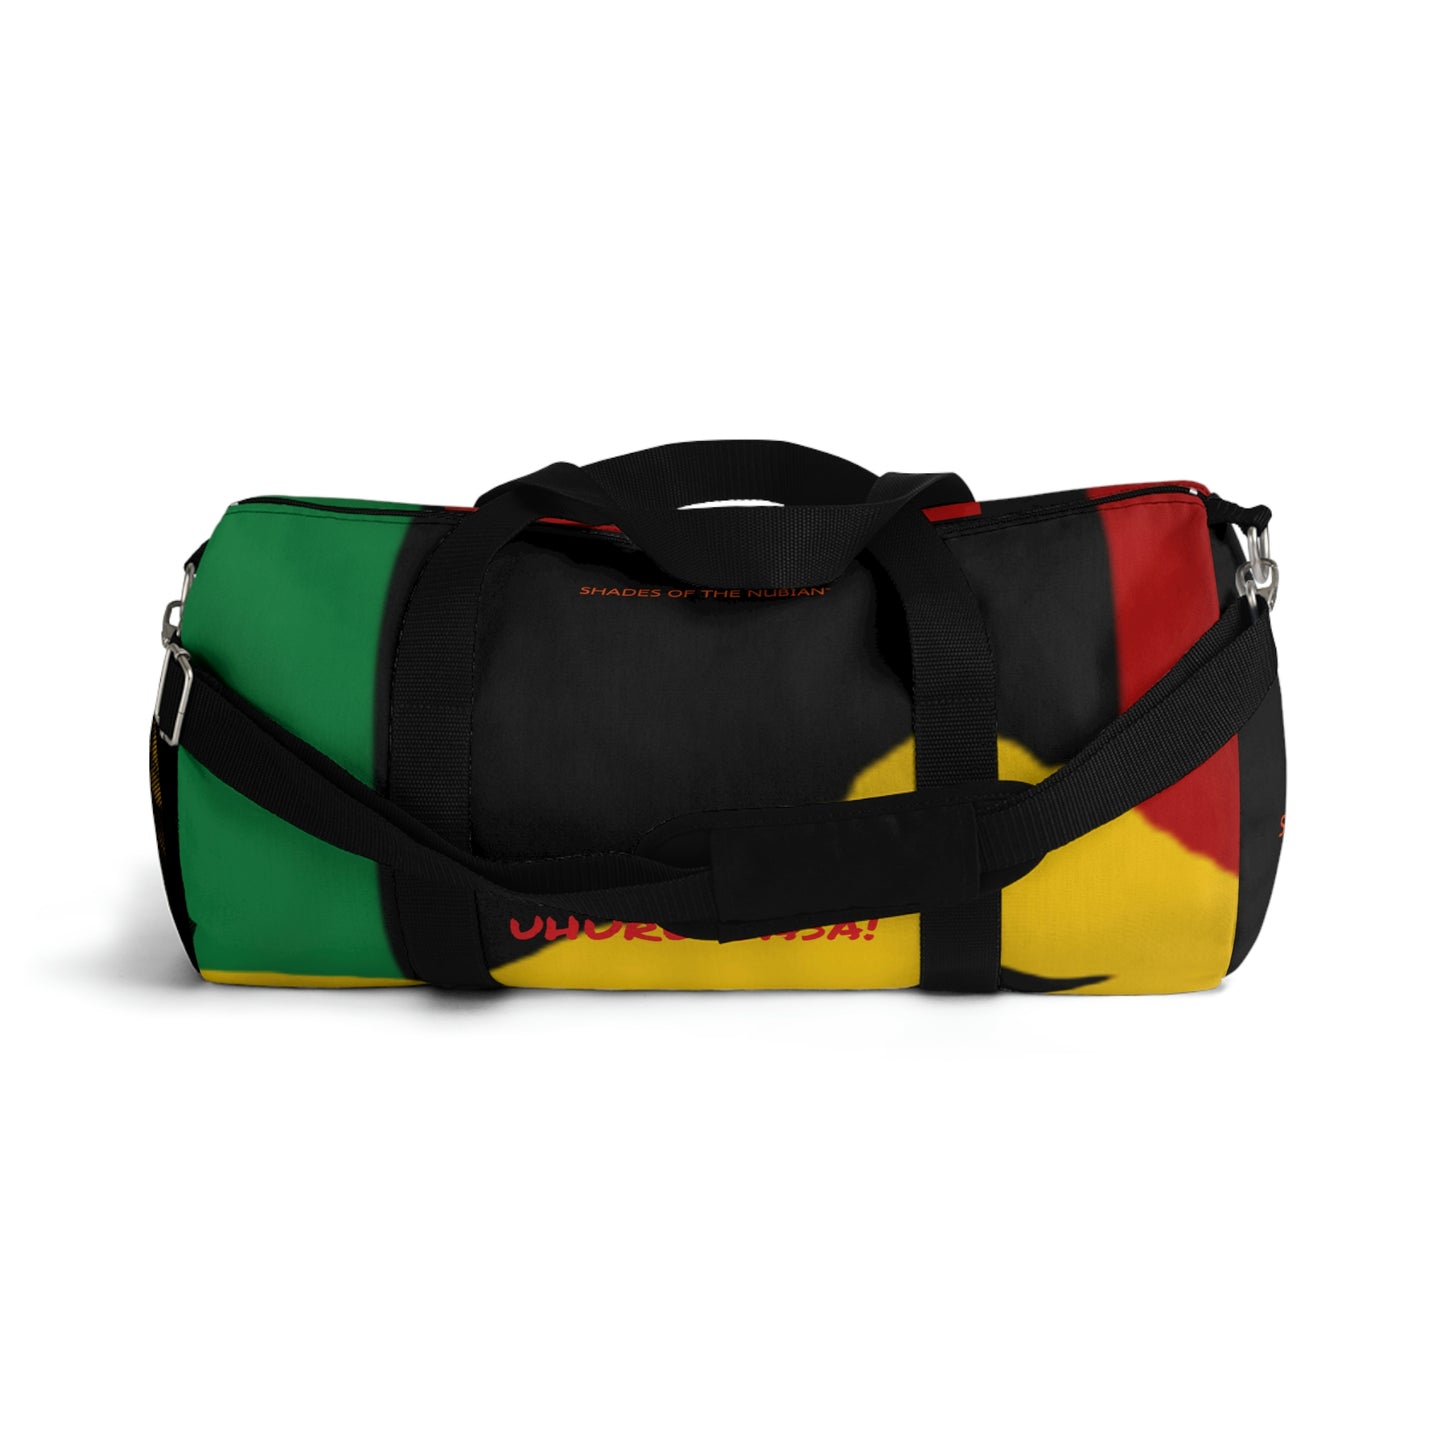 Uhuru Sasa! Duffel Bag